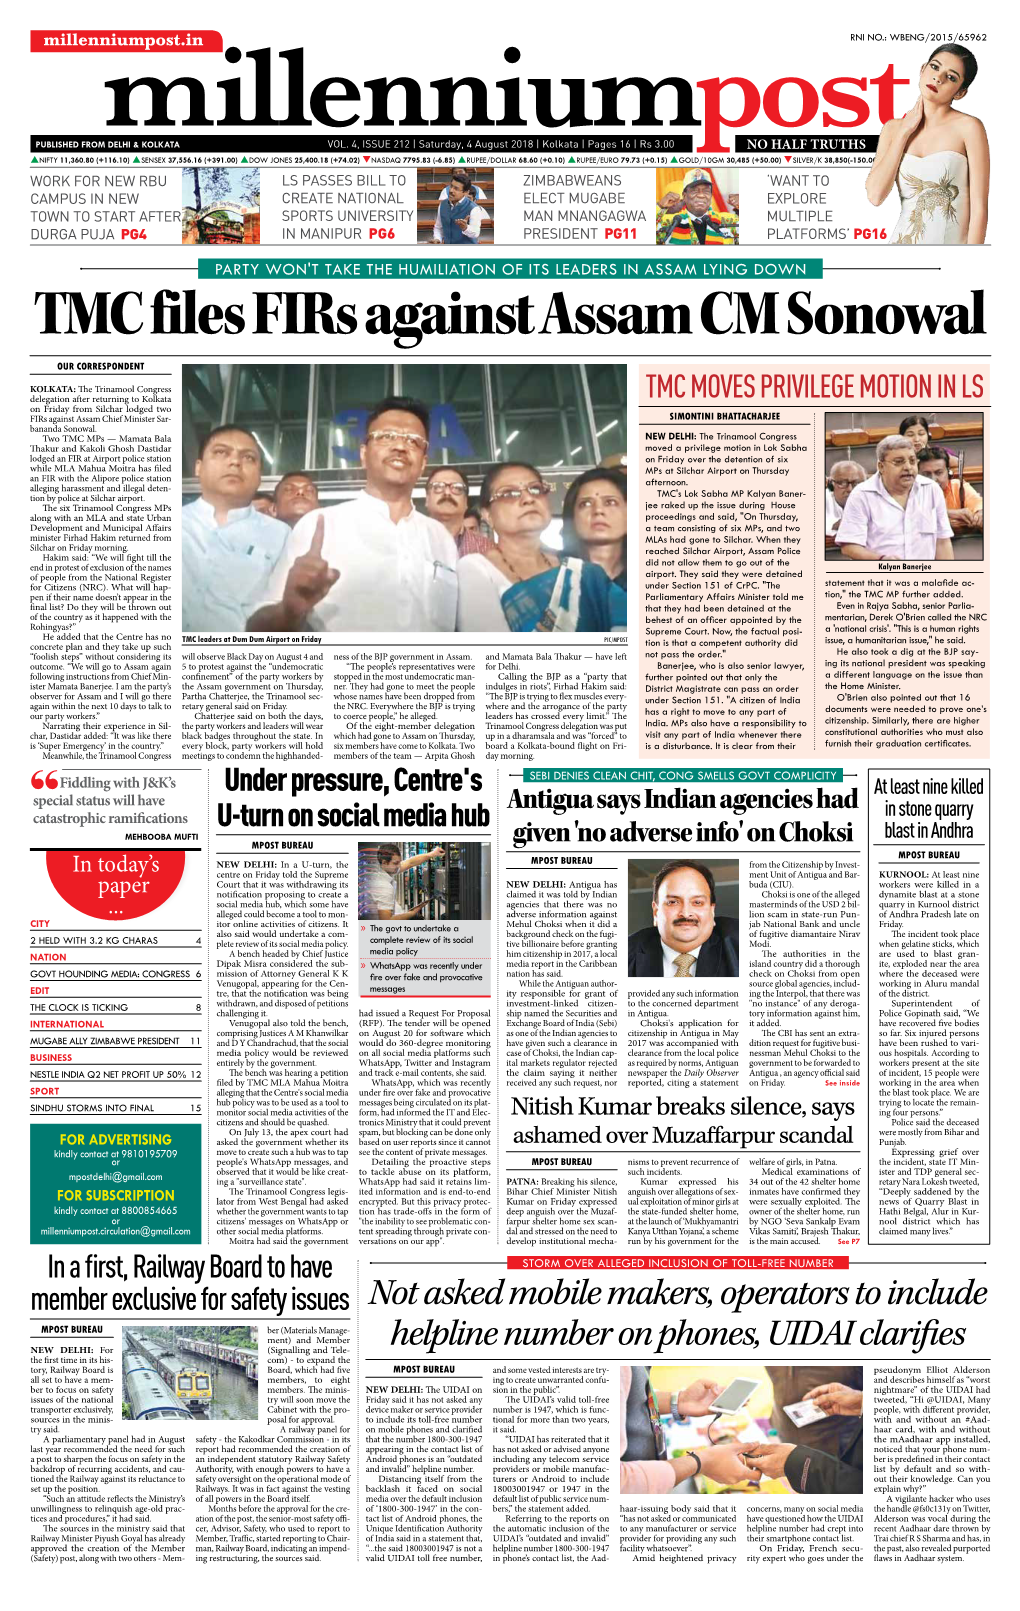 TMC Files Firs Against Assam CM Sonowal OUR CORRESPONDENT